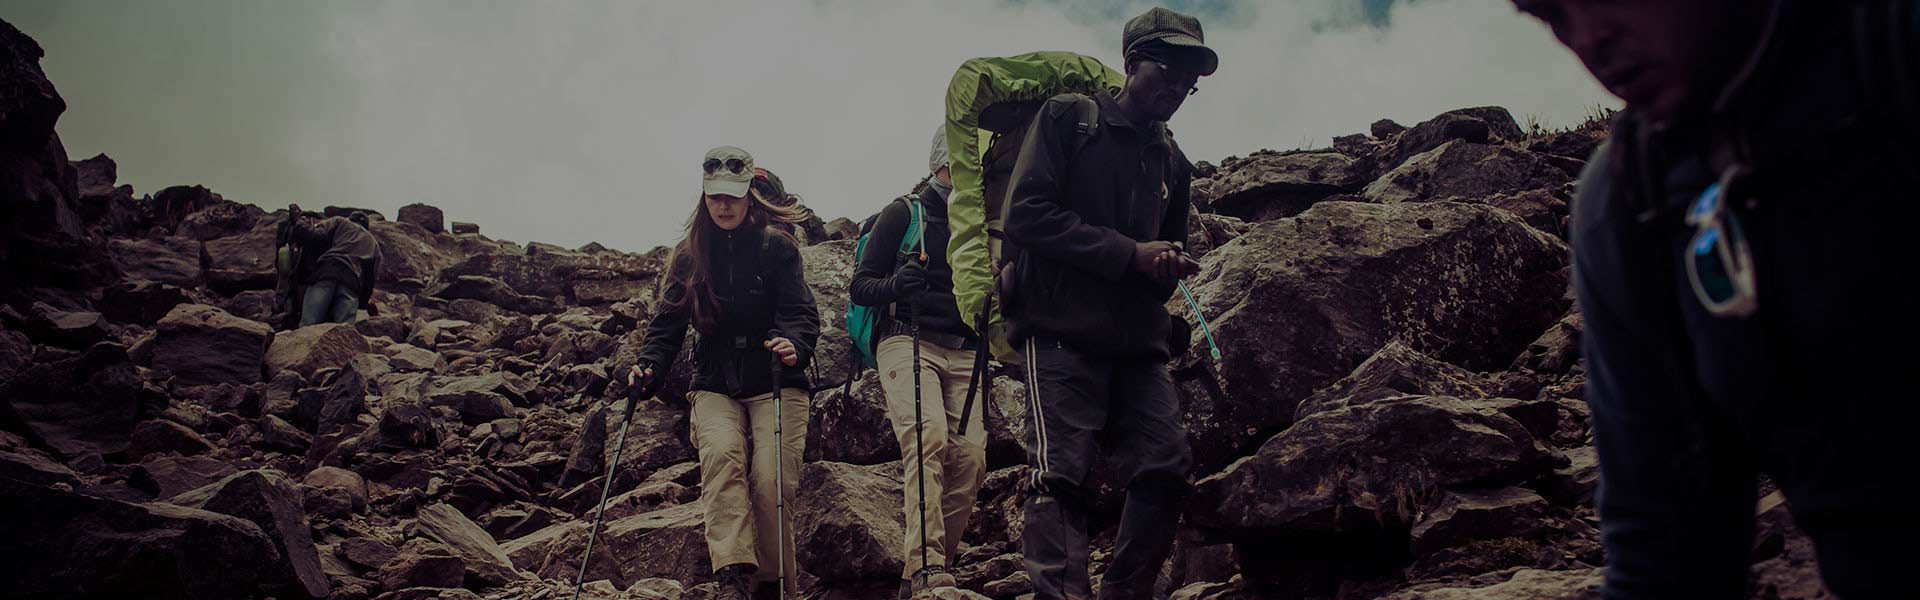 Trekking Guides & Porters